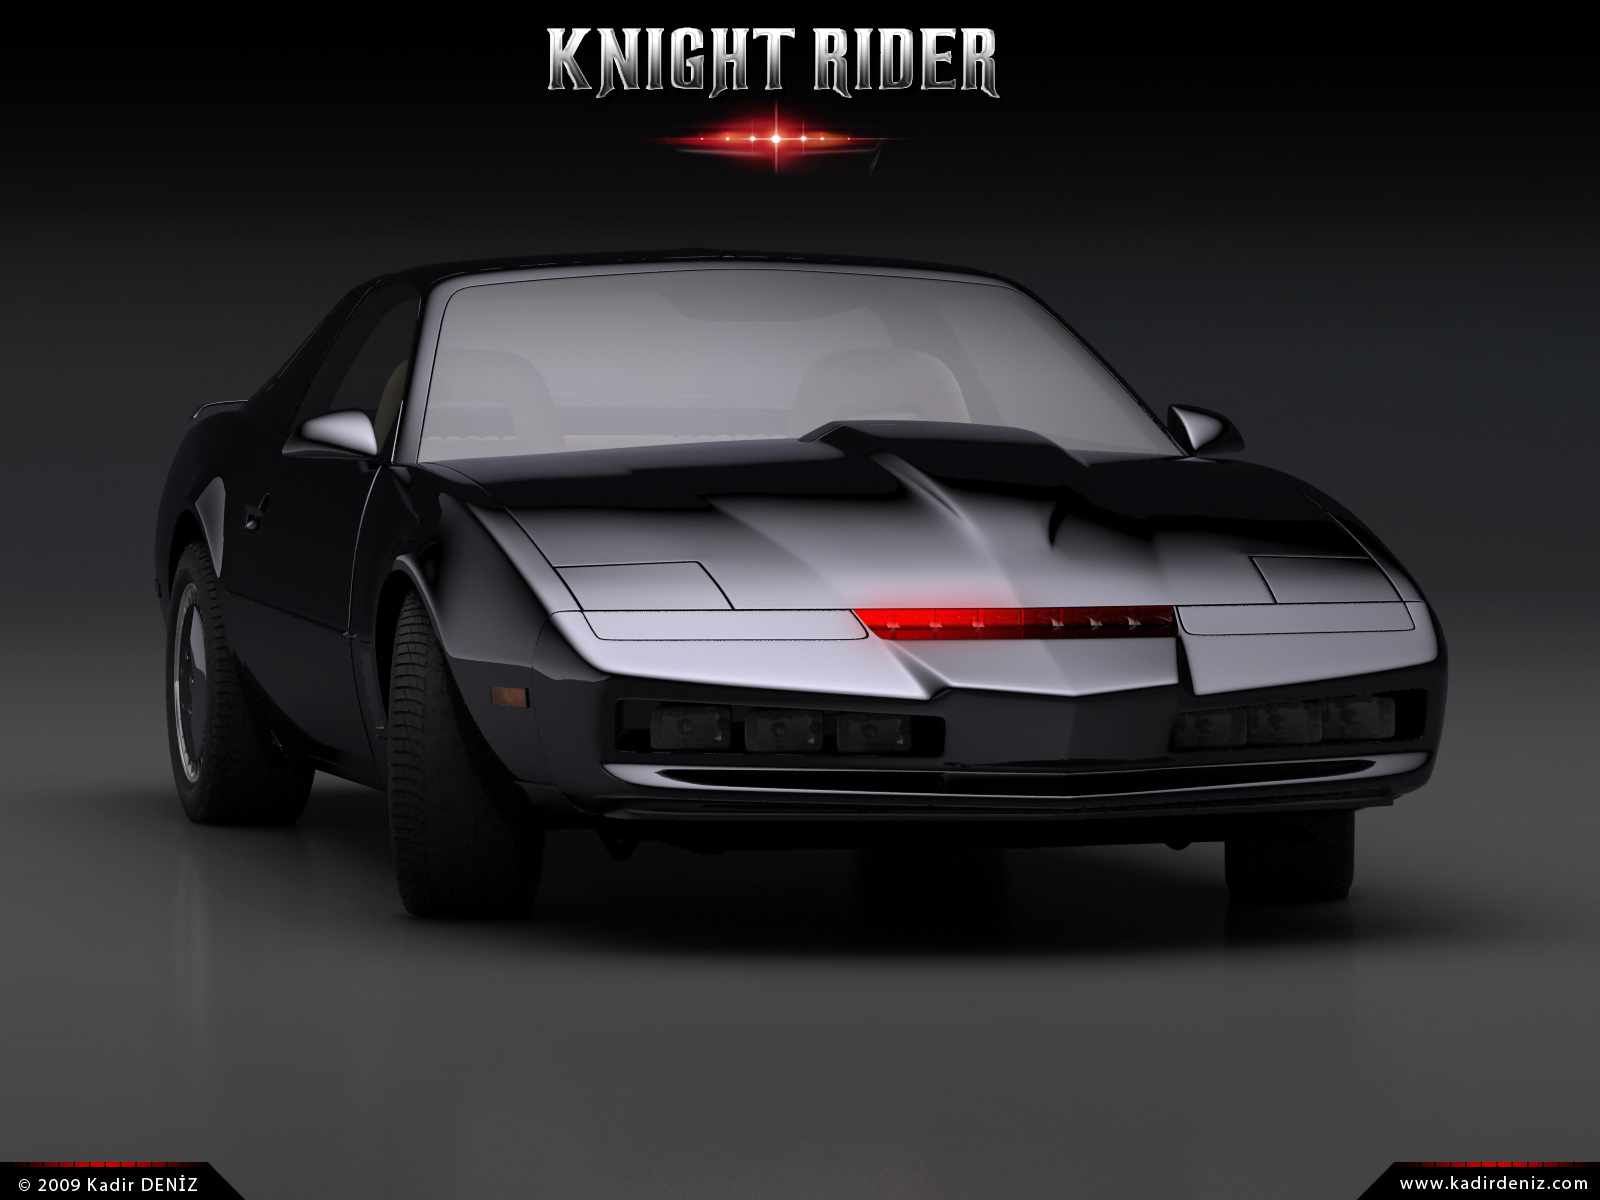 Knight Rider Animated Wallpaper